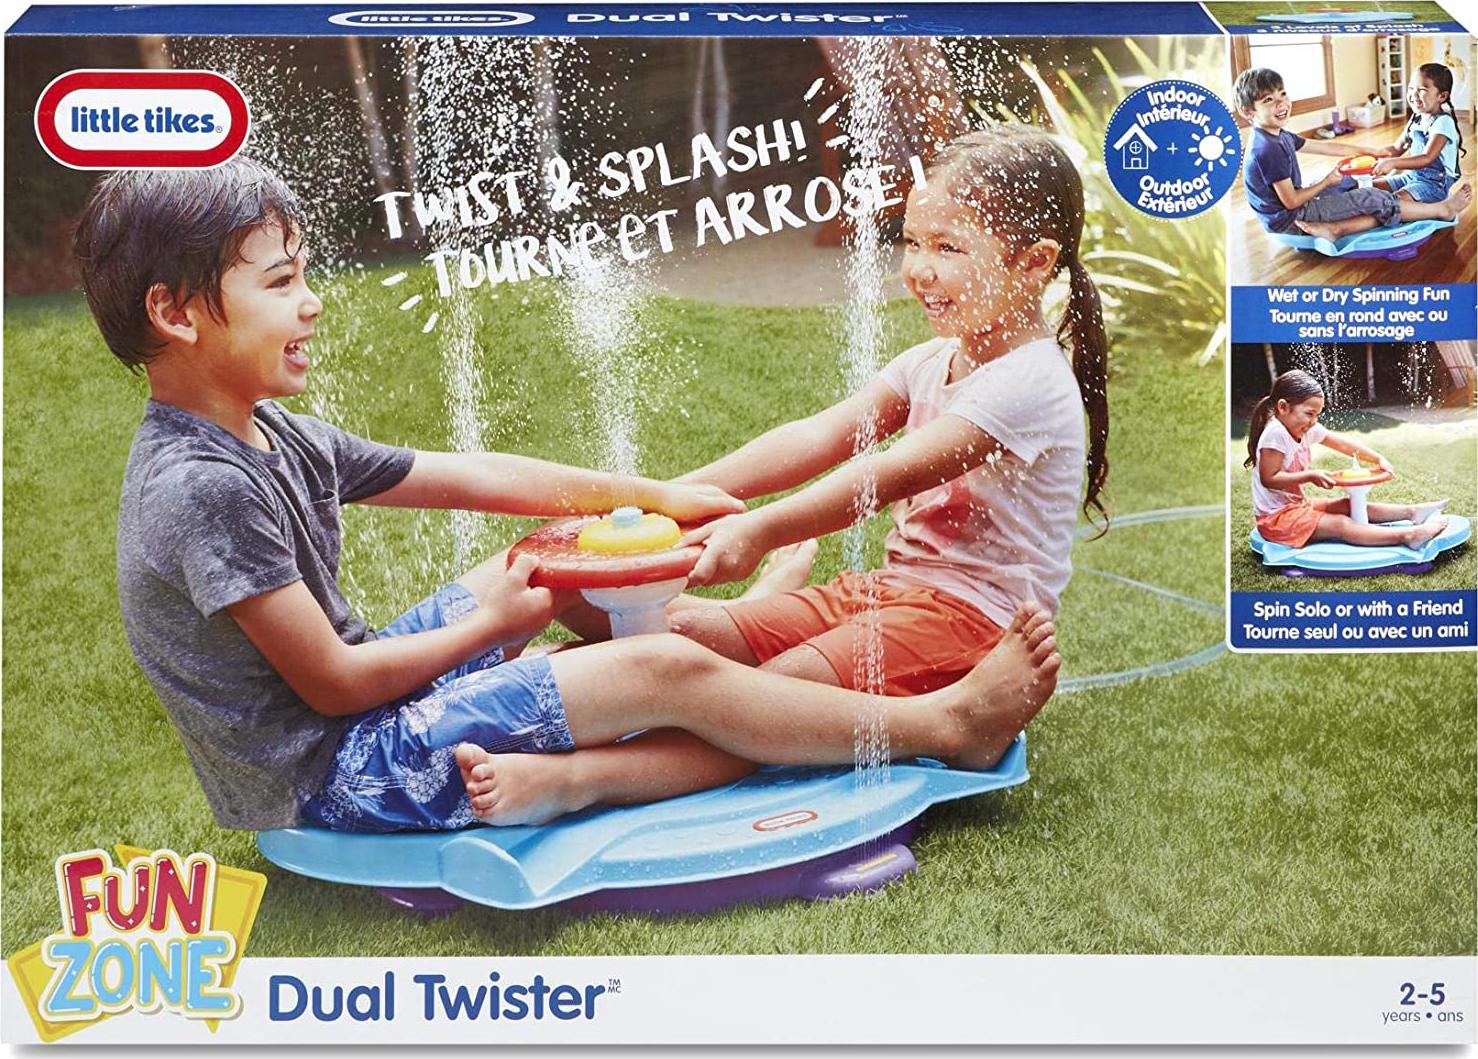 little tikes, Little Tikes Fun Zone Dual Twister